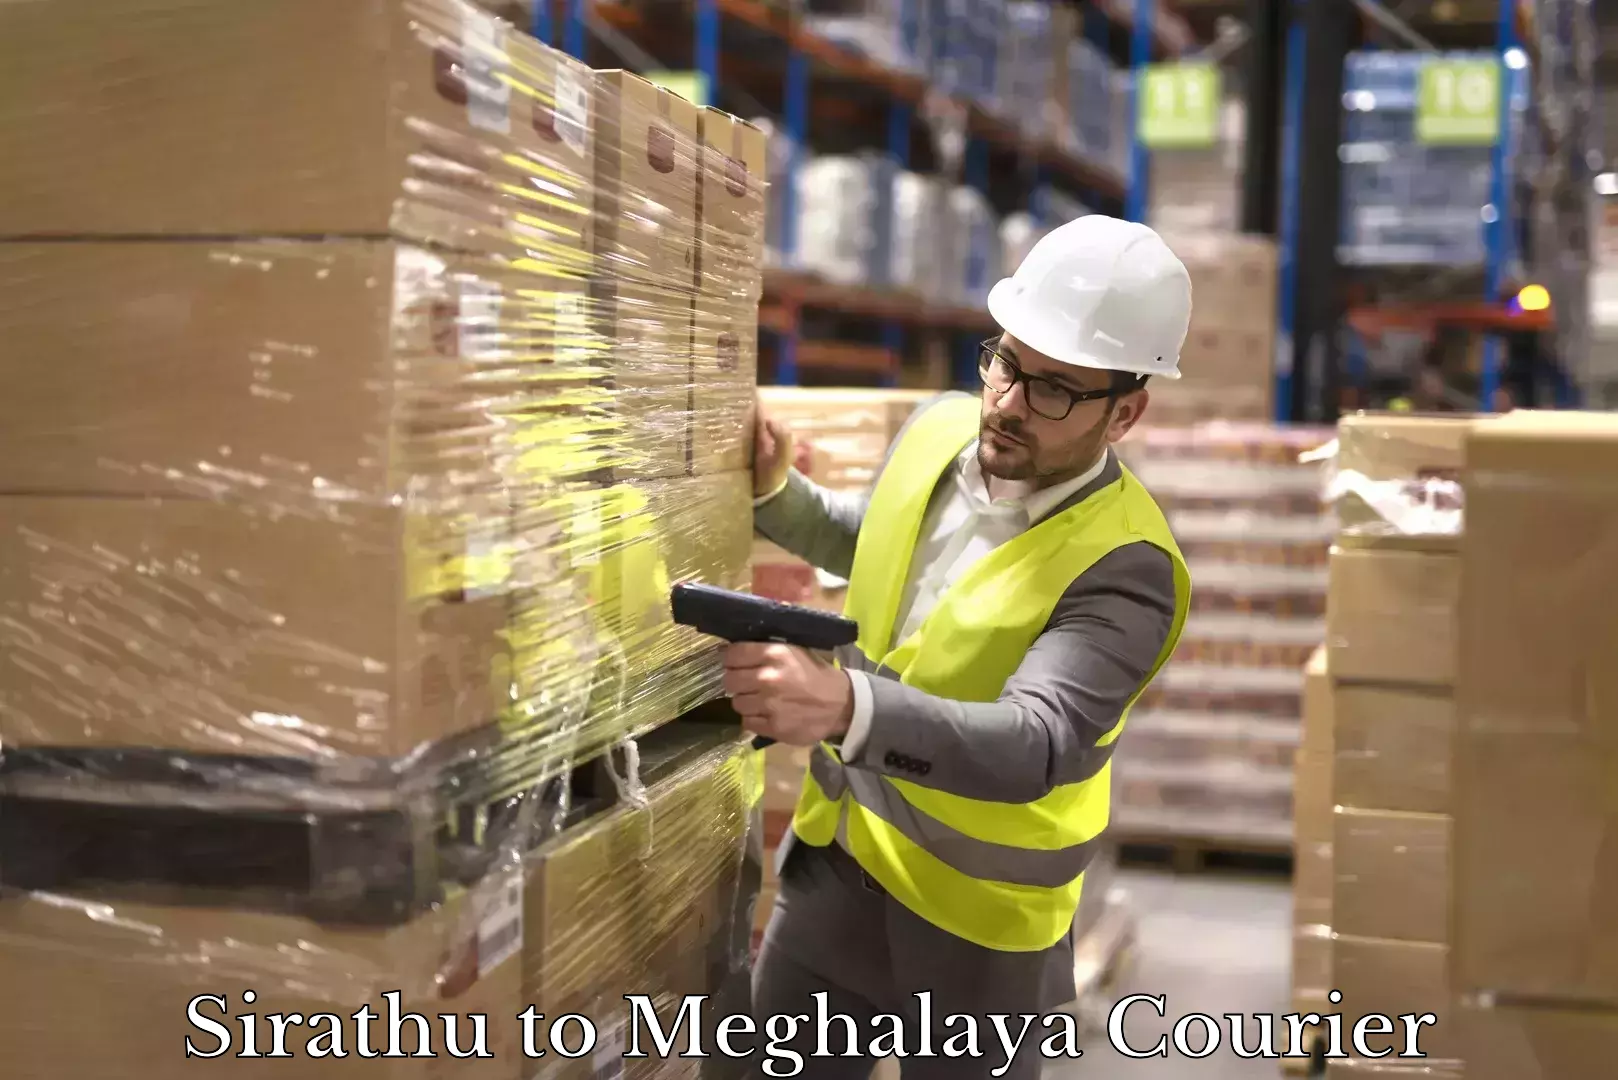 Courier service booking Sirathu to Meghalaya